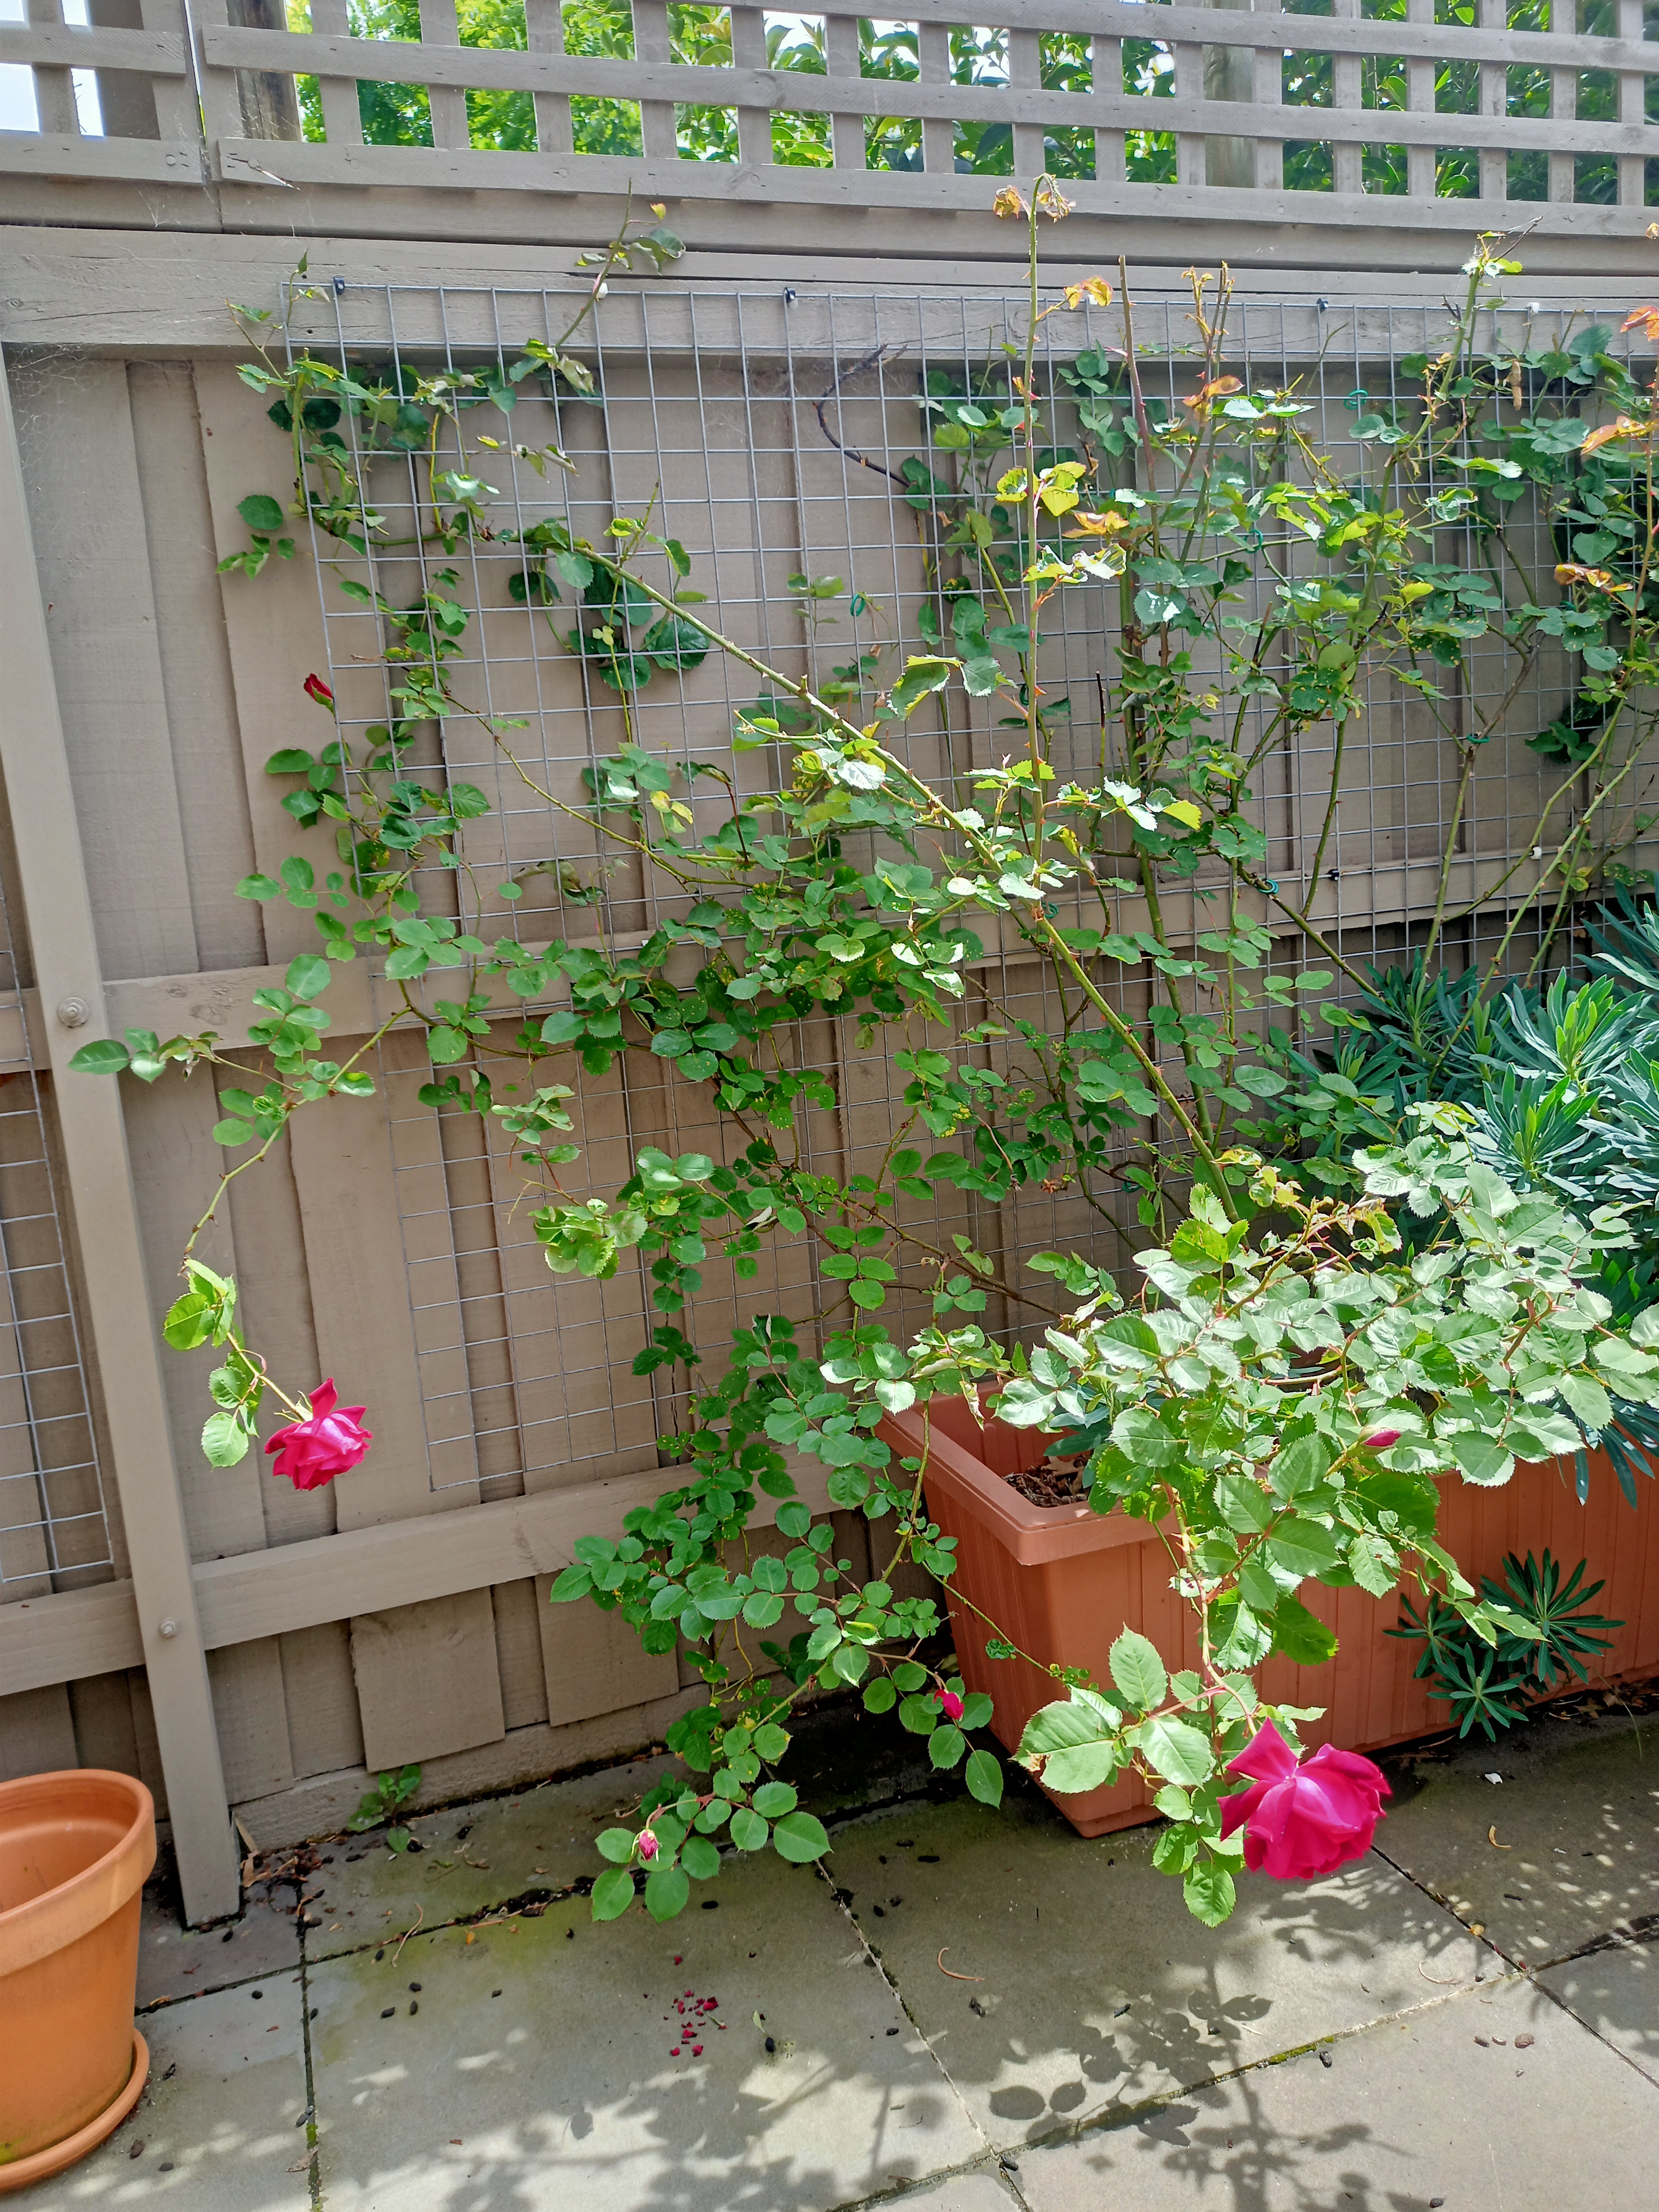 The Rose Bushes in Full leaf